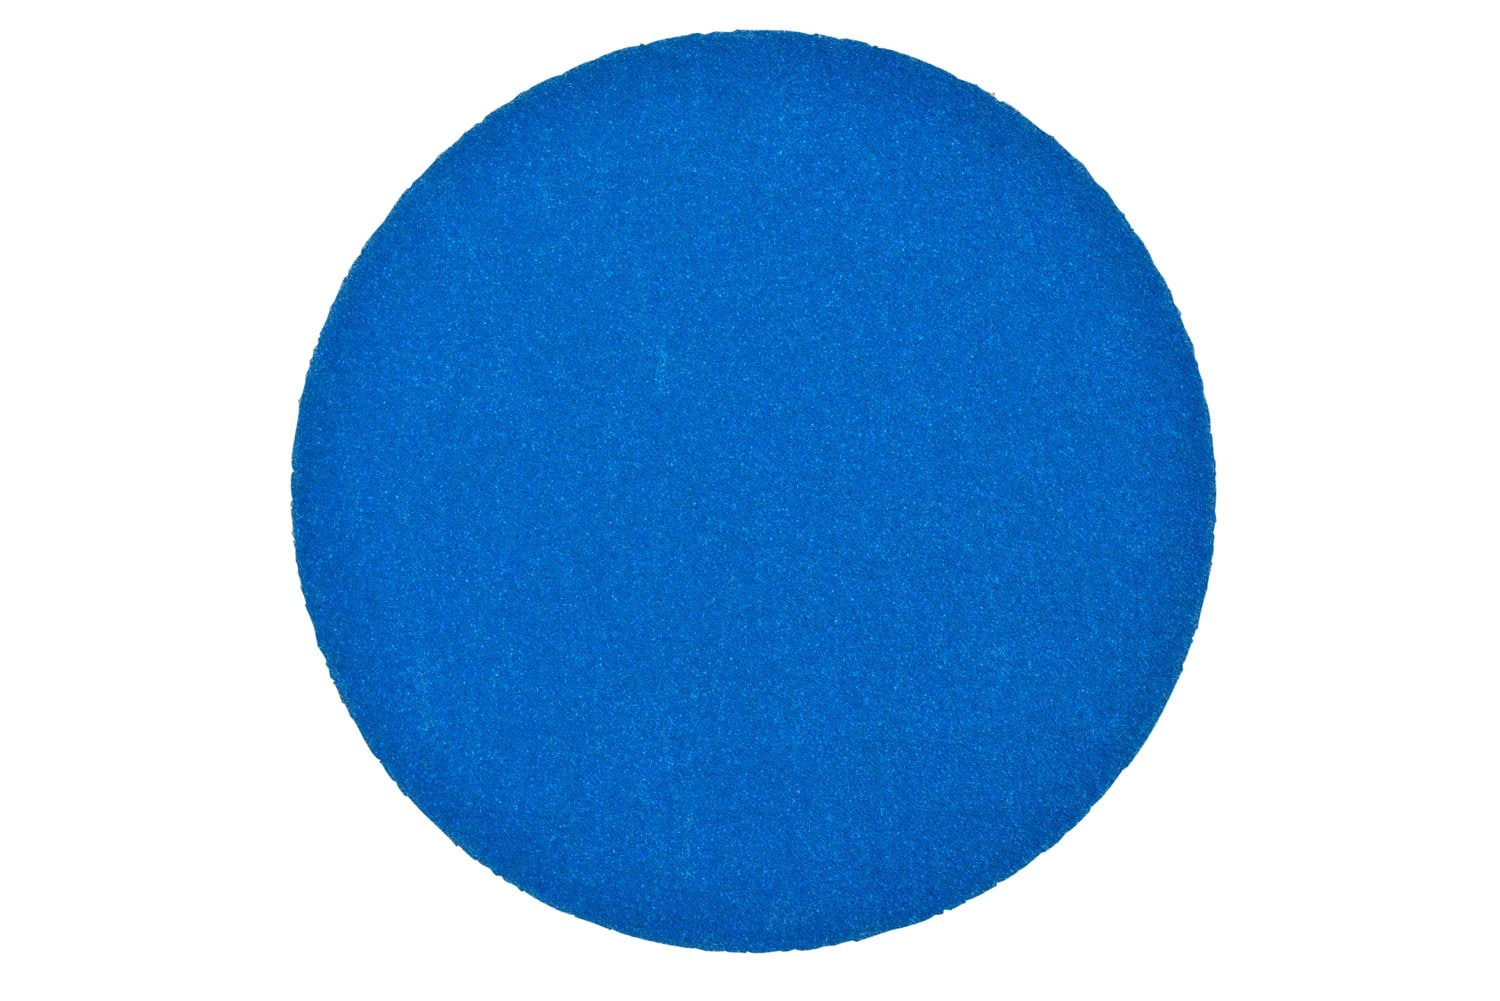 7100230014 - 3M Hookit Blue Abrasive Disc 36284, 3 in, Grade 120, No Hole, 50
Discs/Carton, 4 Cartons/Case